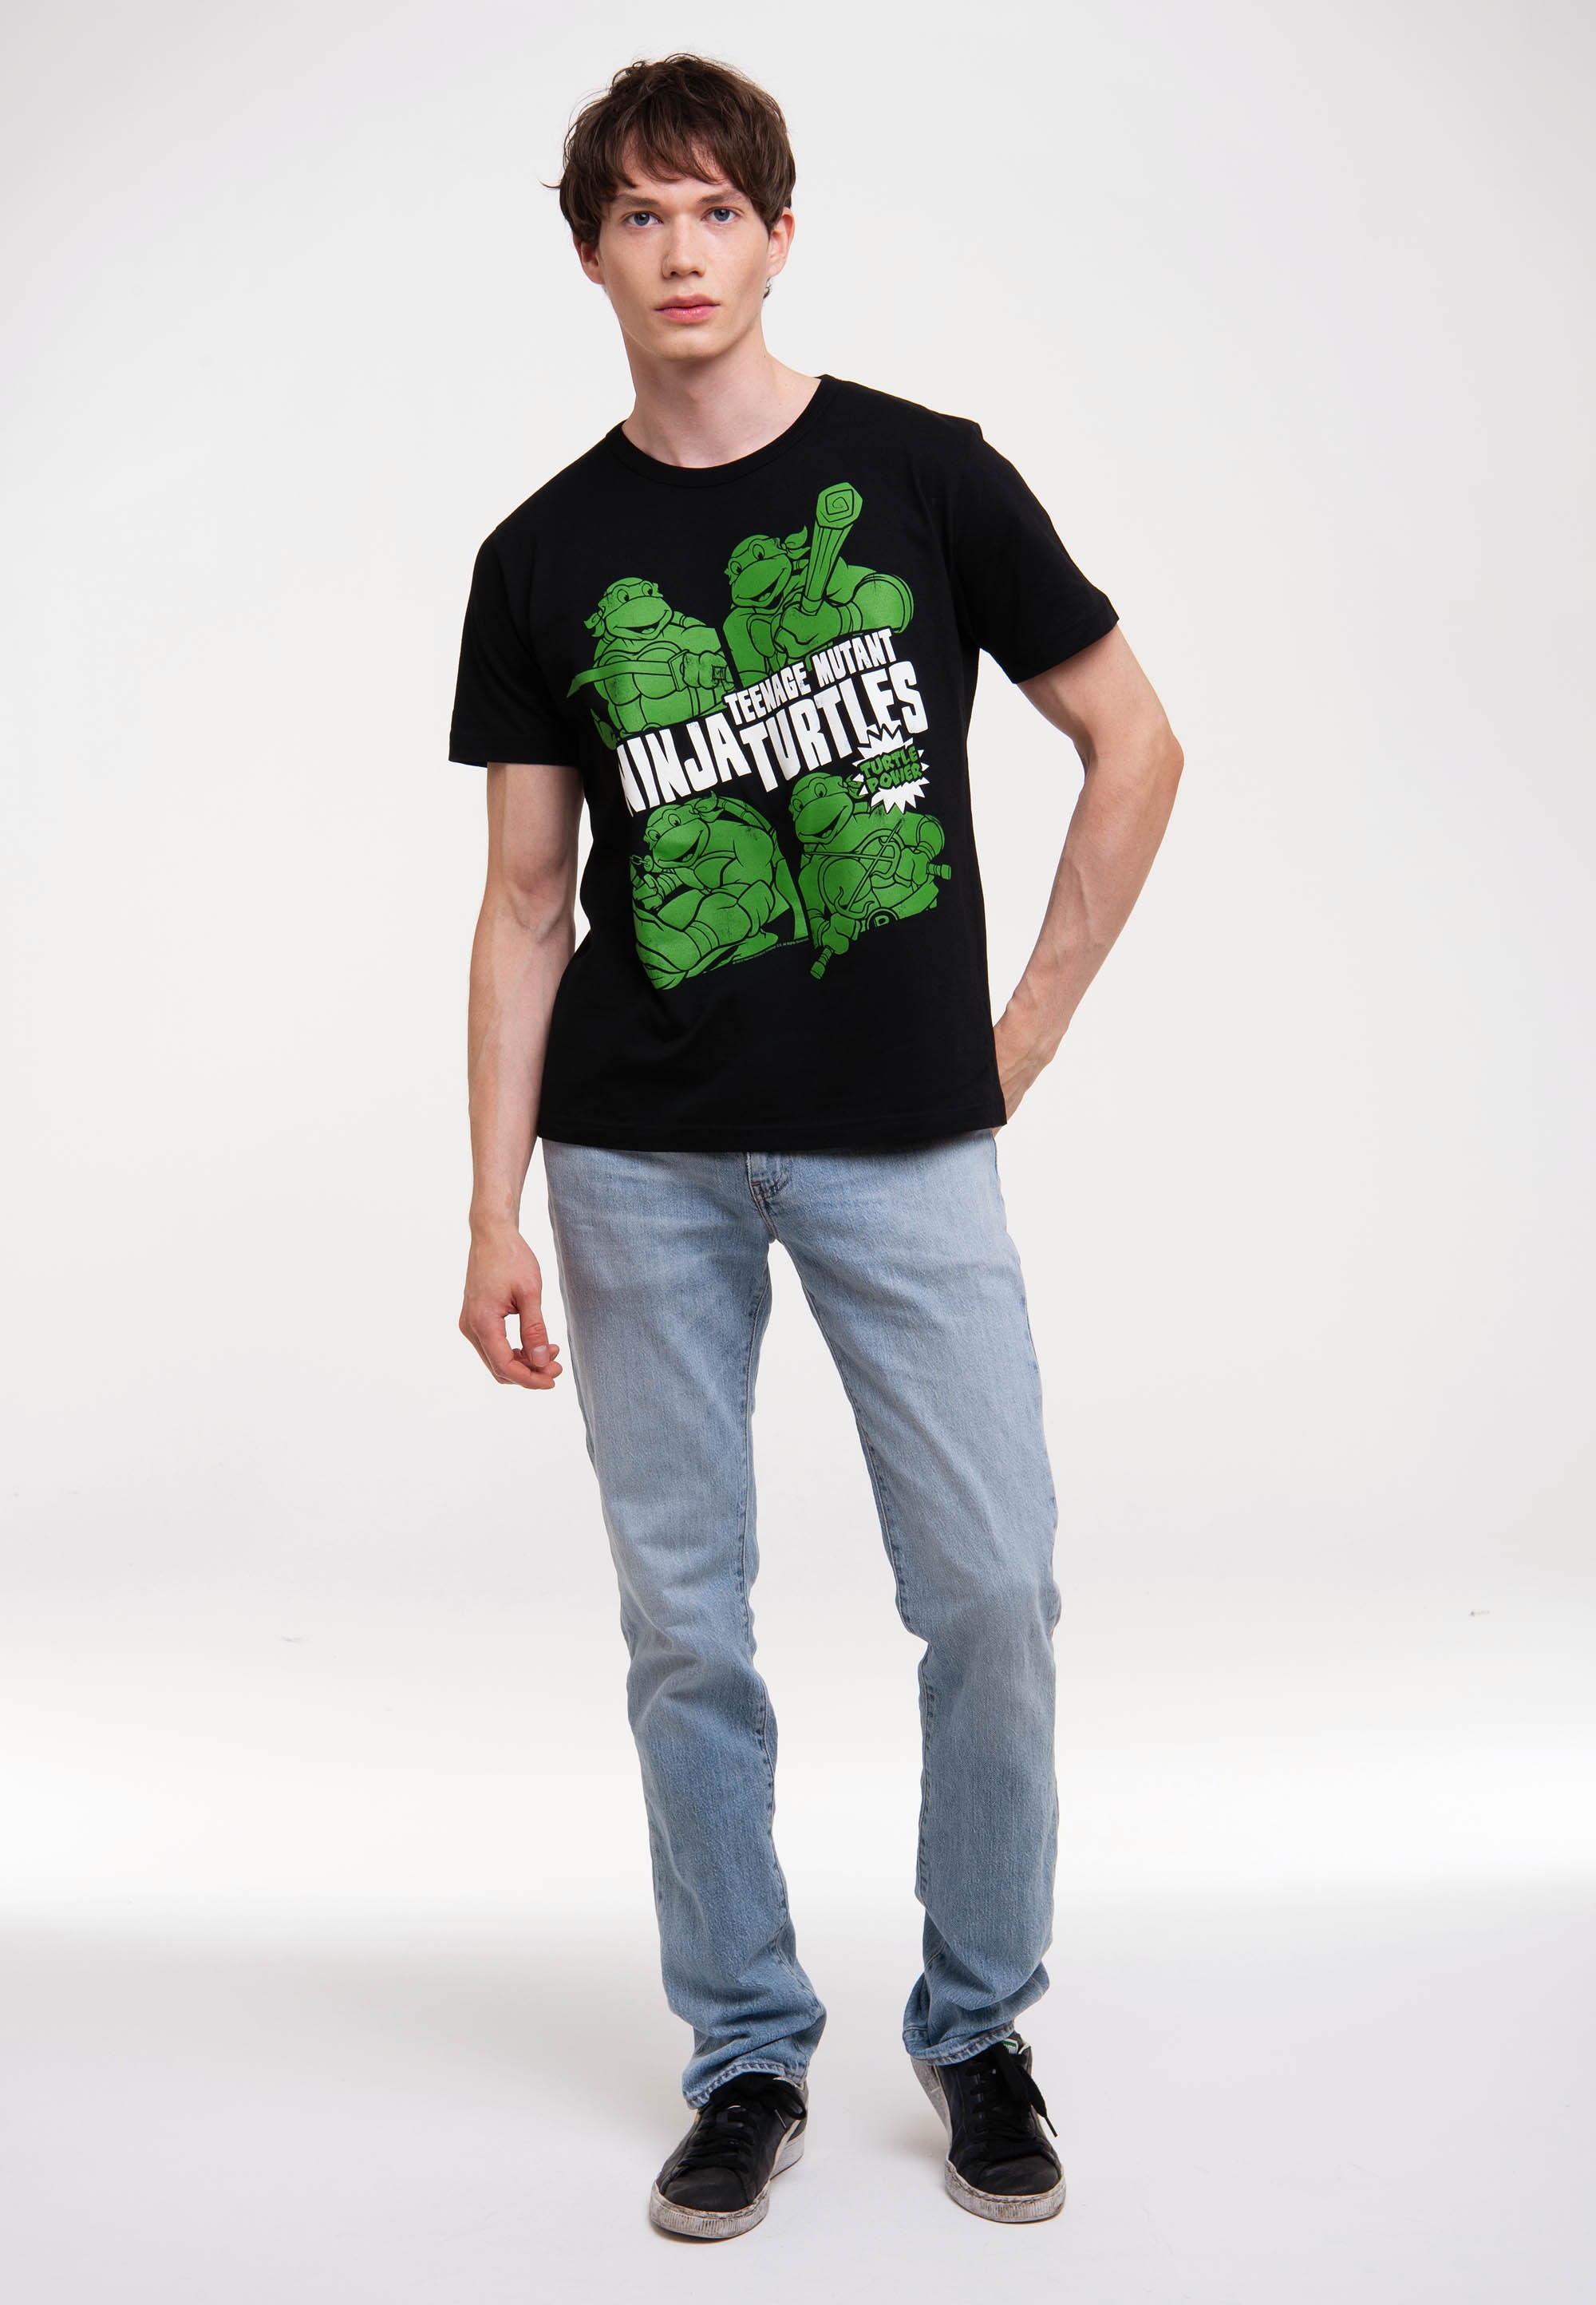 LOGOSHIRT T-Shirt »Ninja Turtles - Turtle Power«, mit lizenziertem Print